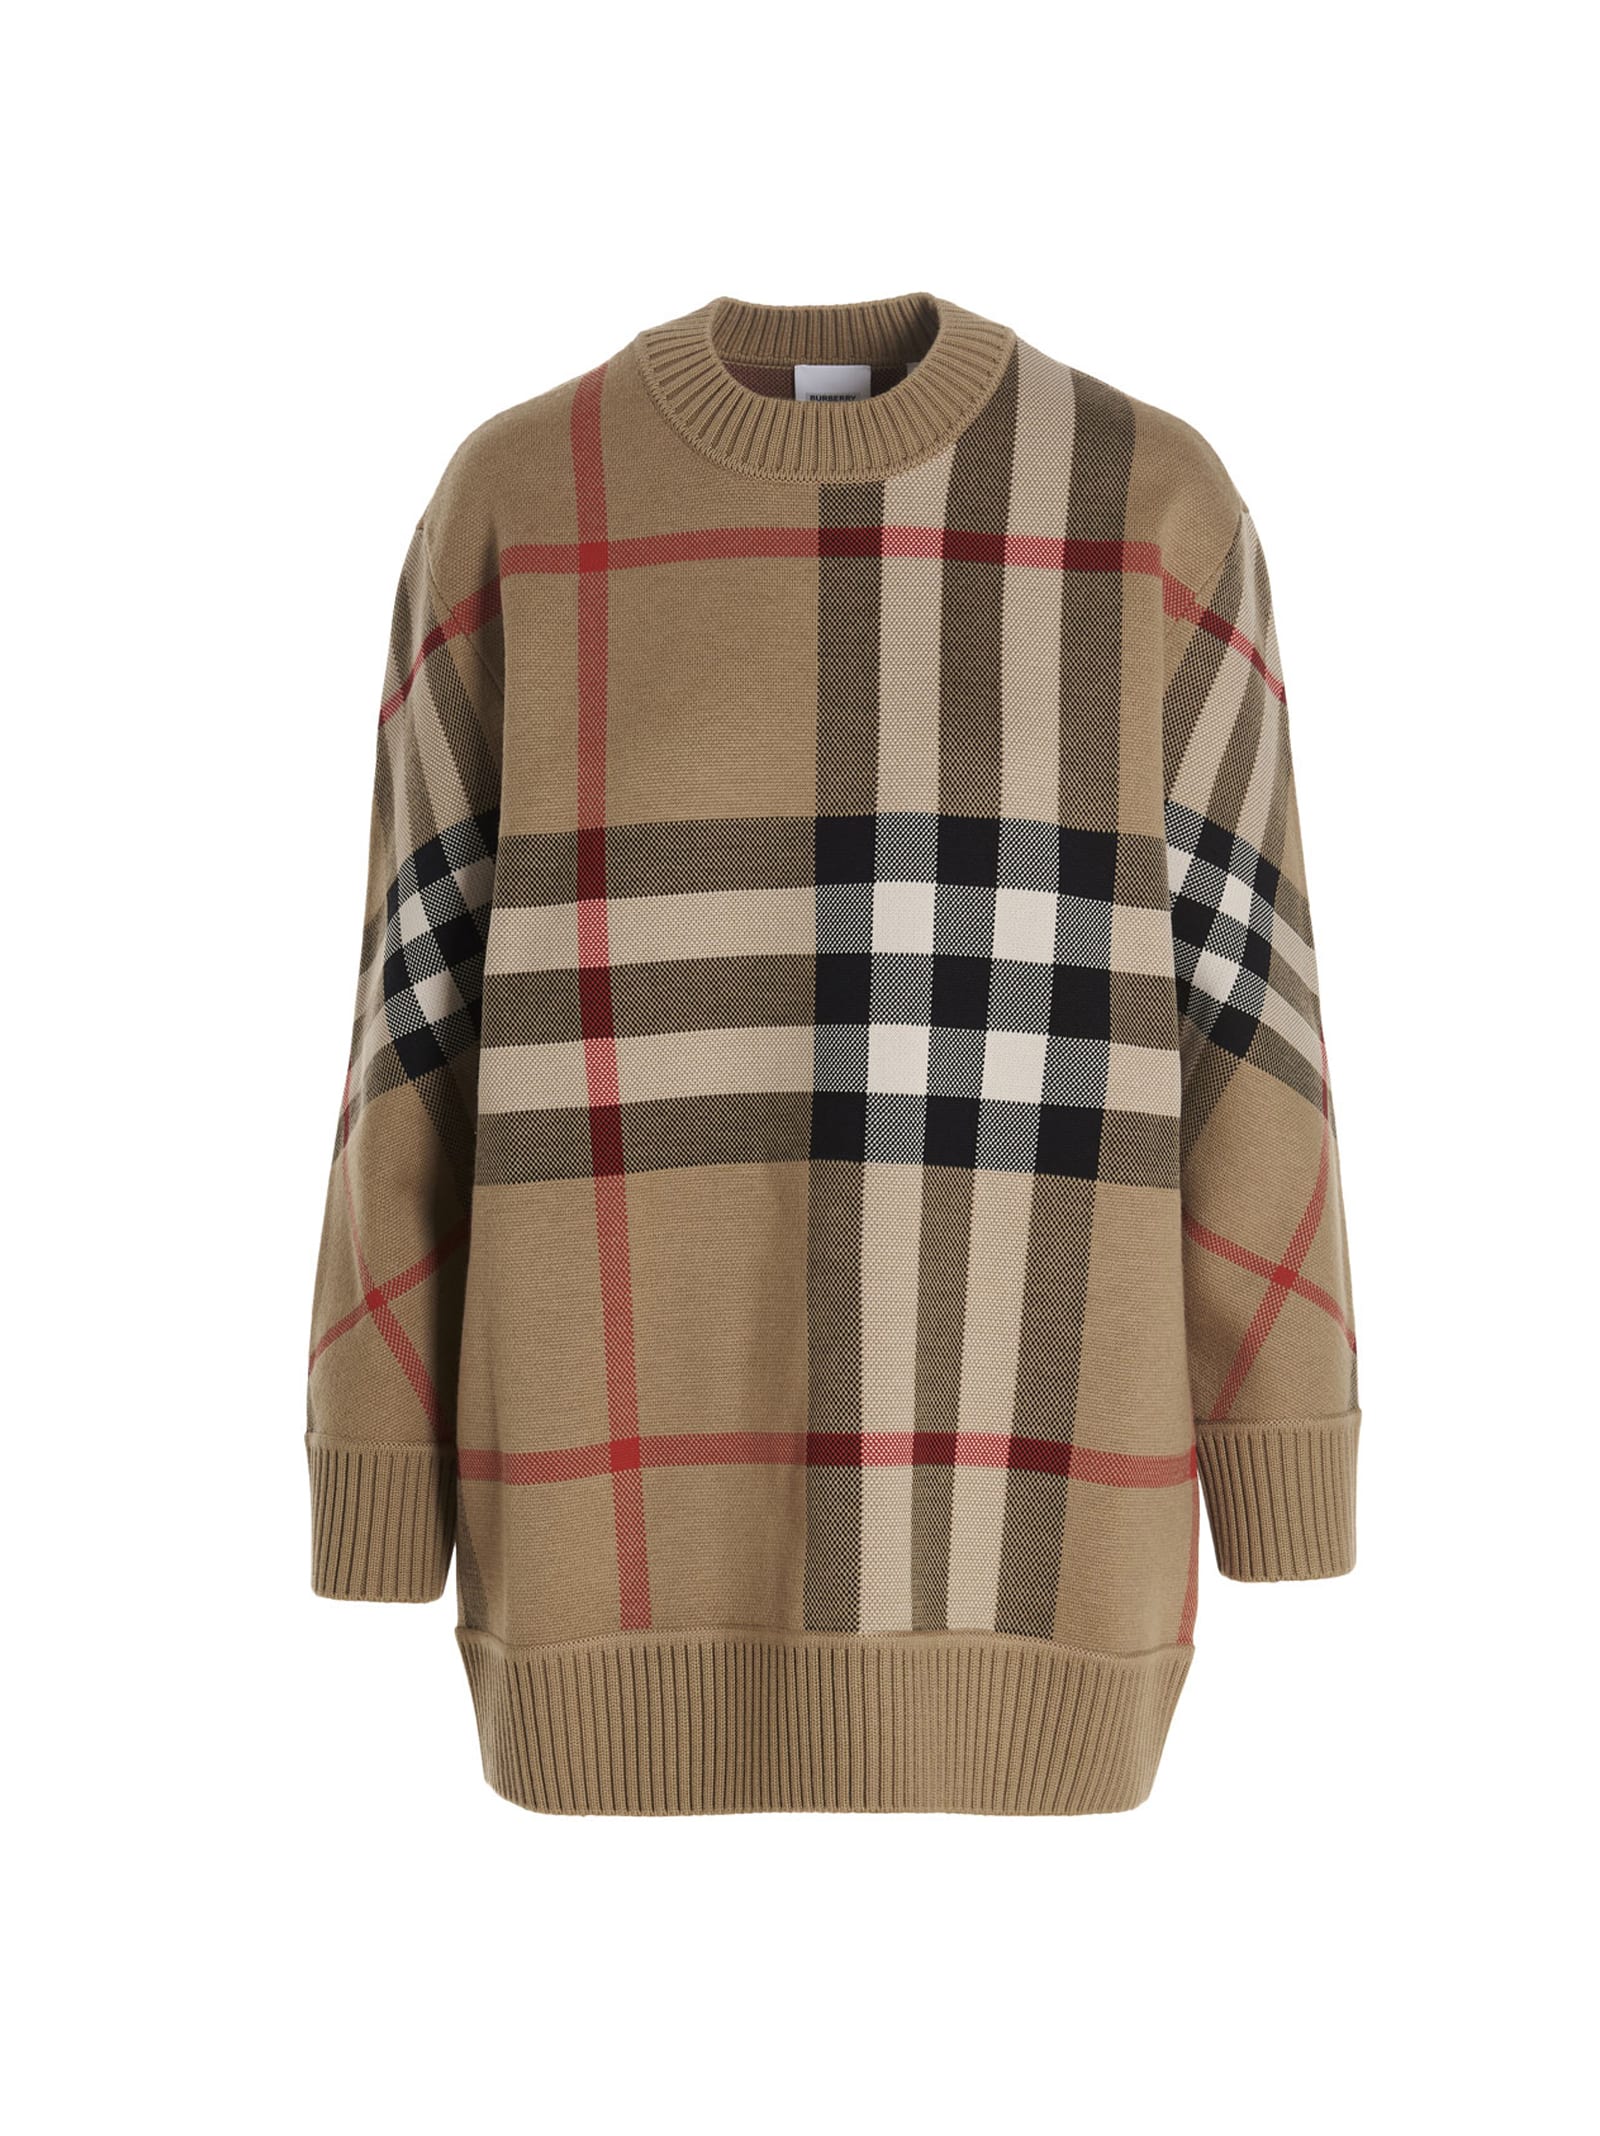 Burberry calee Sweater